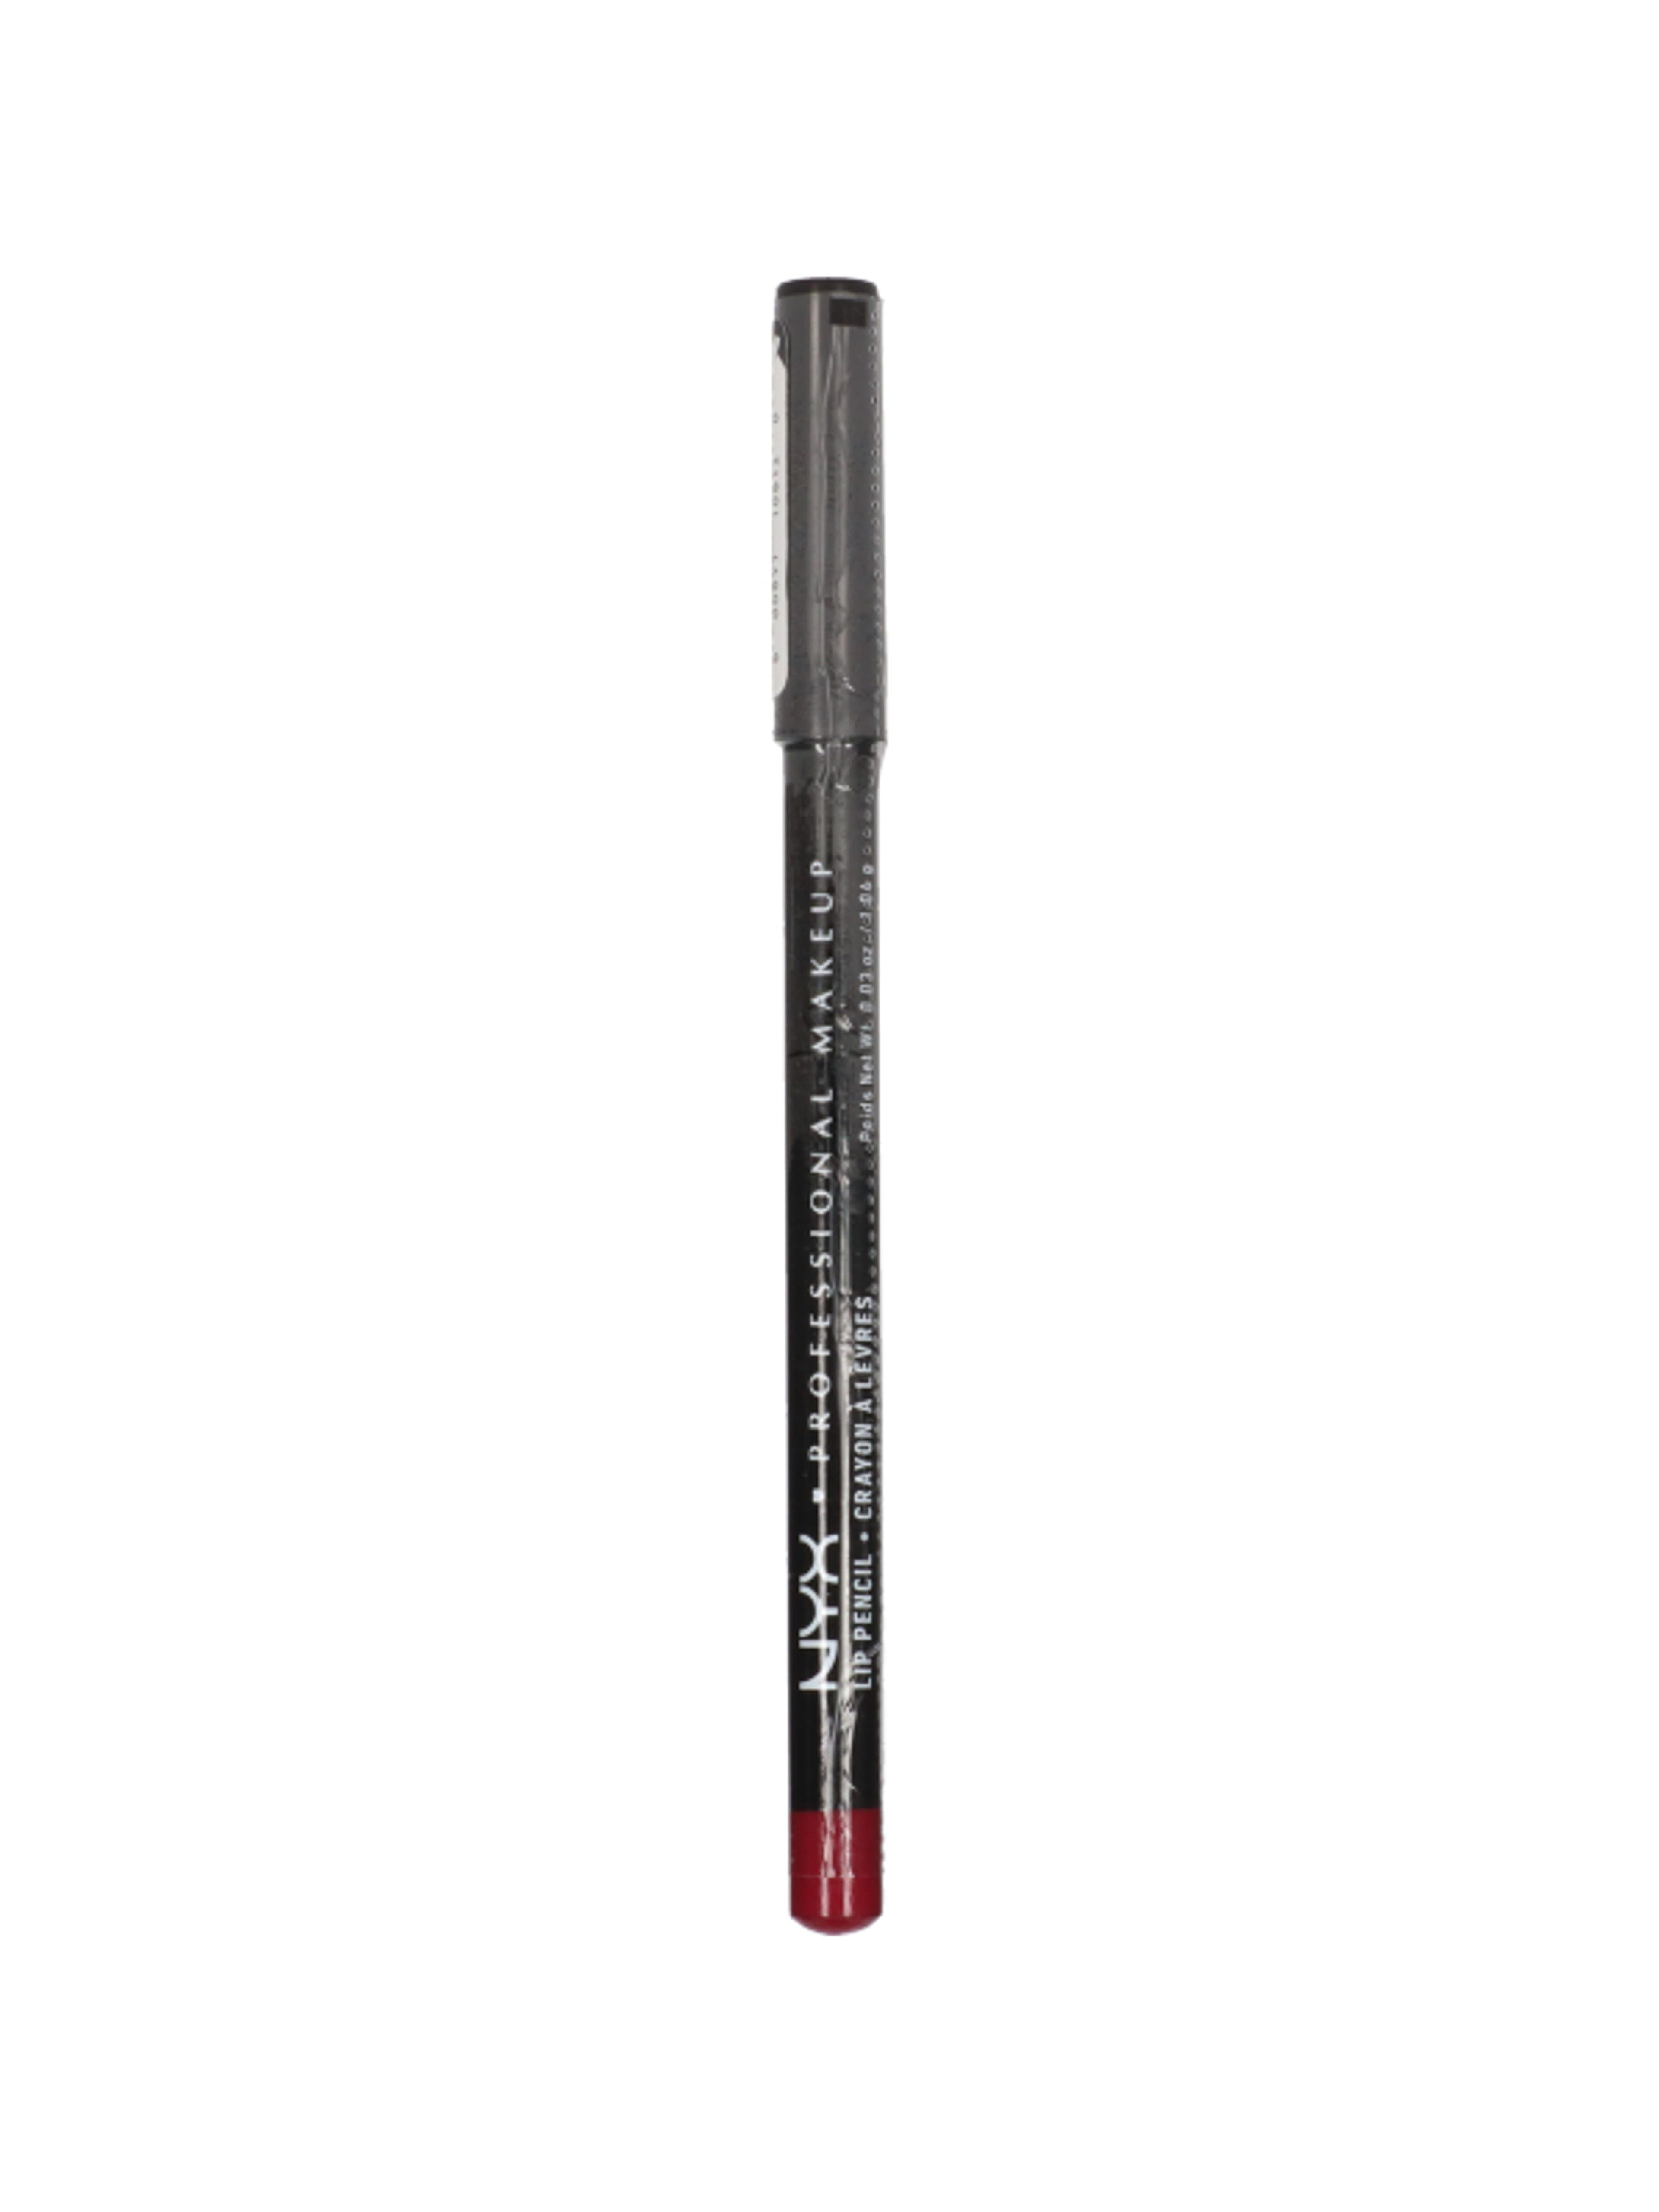 NYX Professional Makeup Slim Lip Pencil ajakkontúr ceruza, Plum - 1 db-4